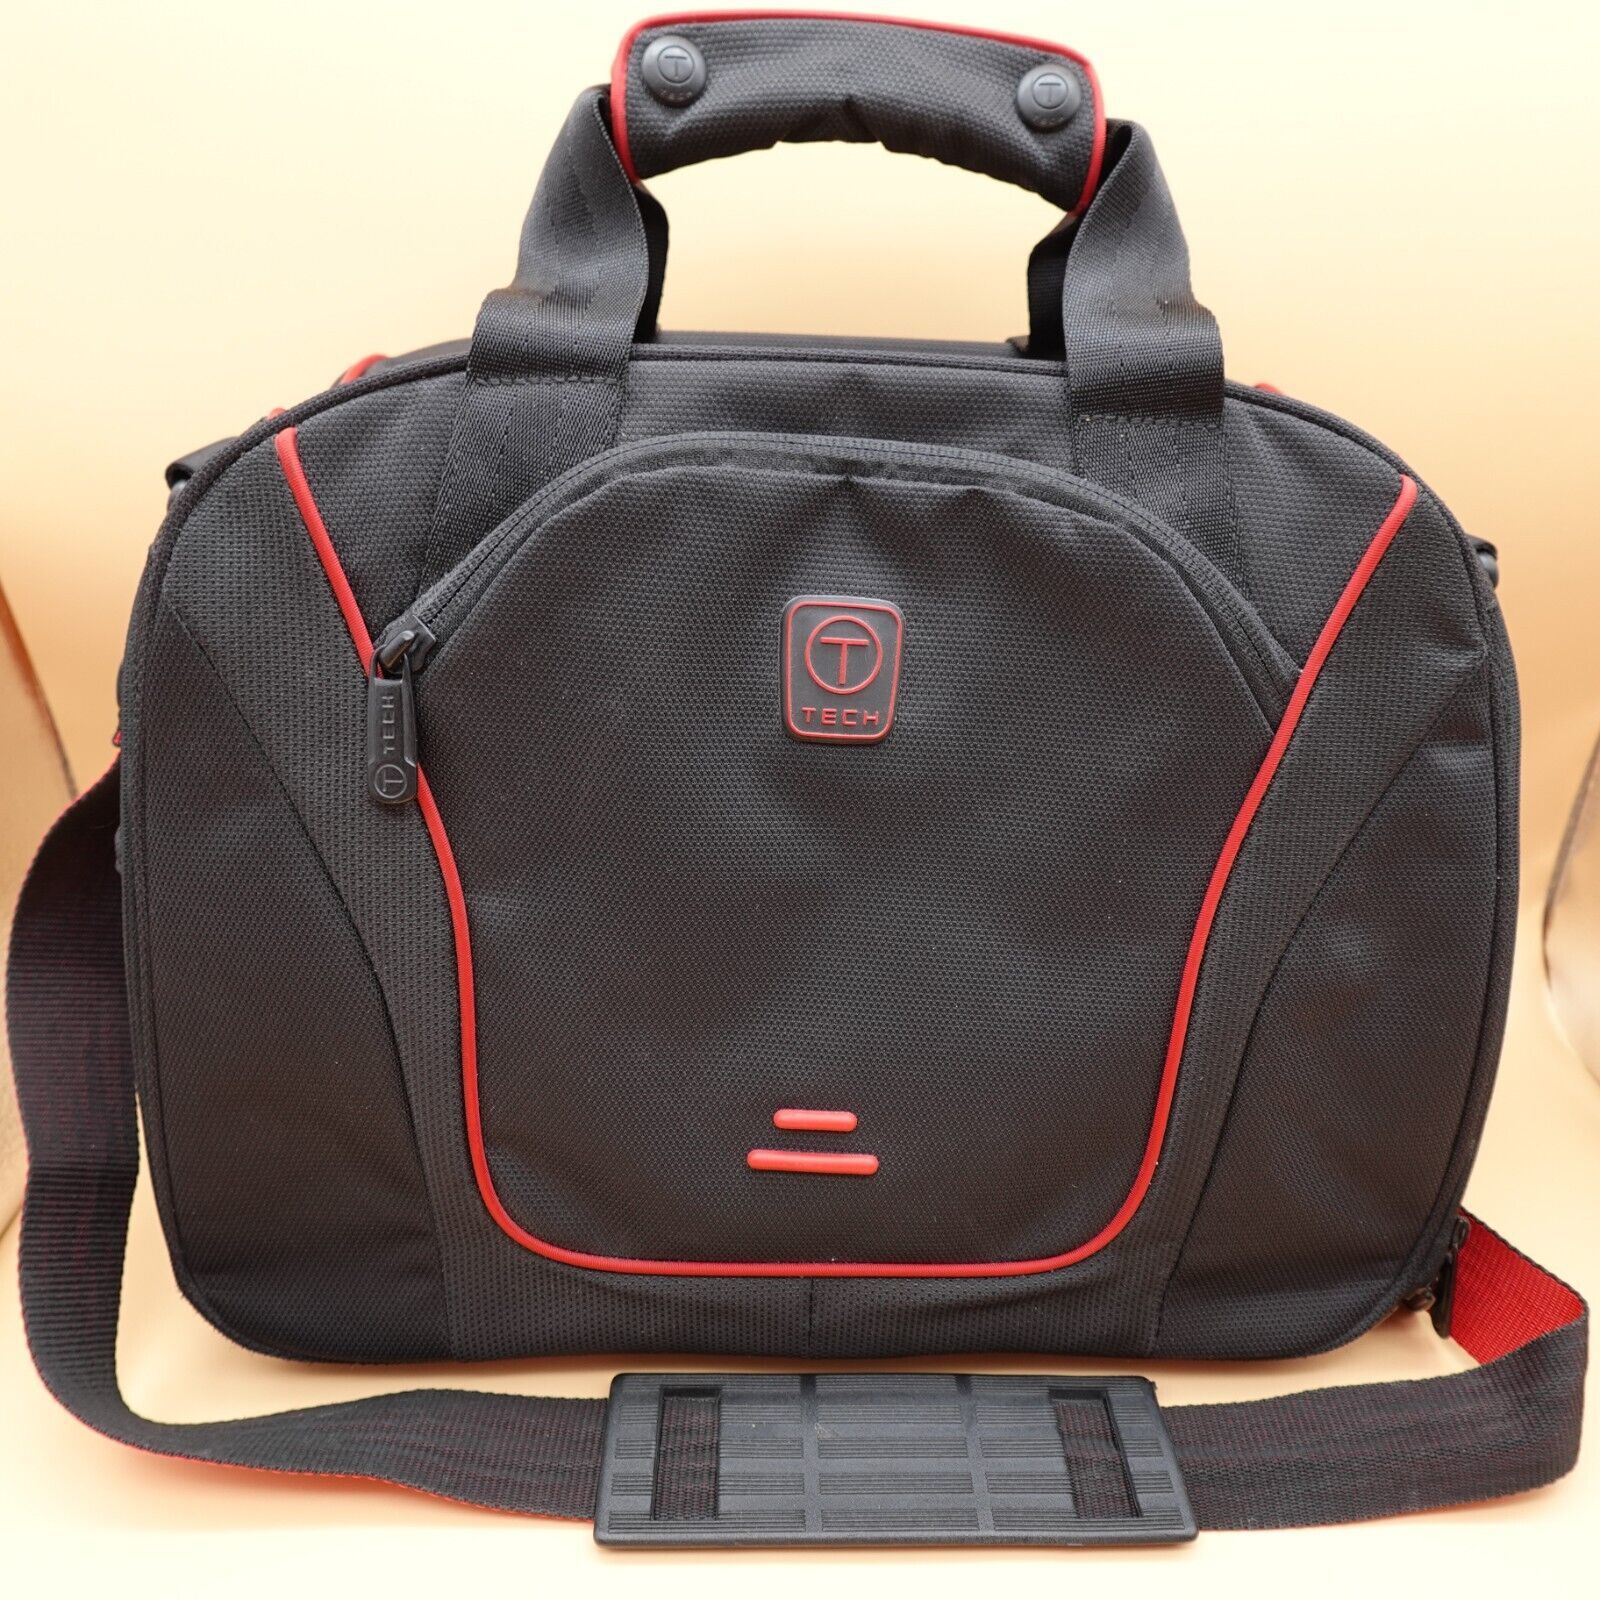 Tumi T Tech Overnight Bag Black Weekender Travel CarryOn Shoulder Strap Red Trim - $49.95